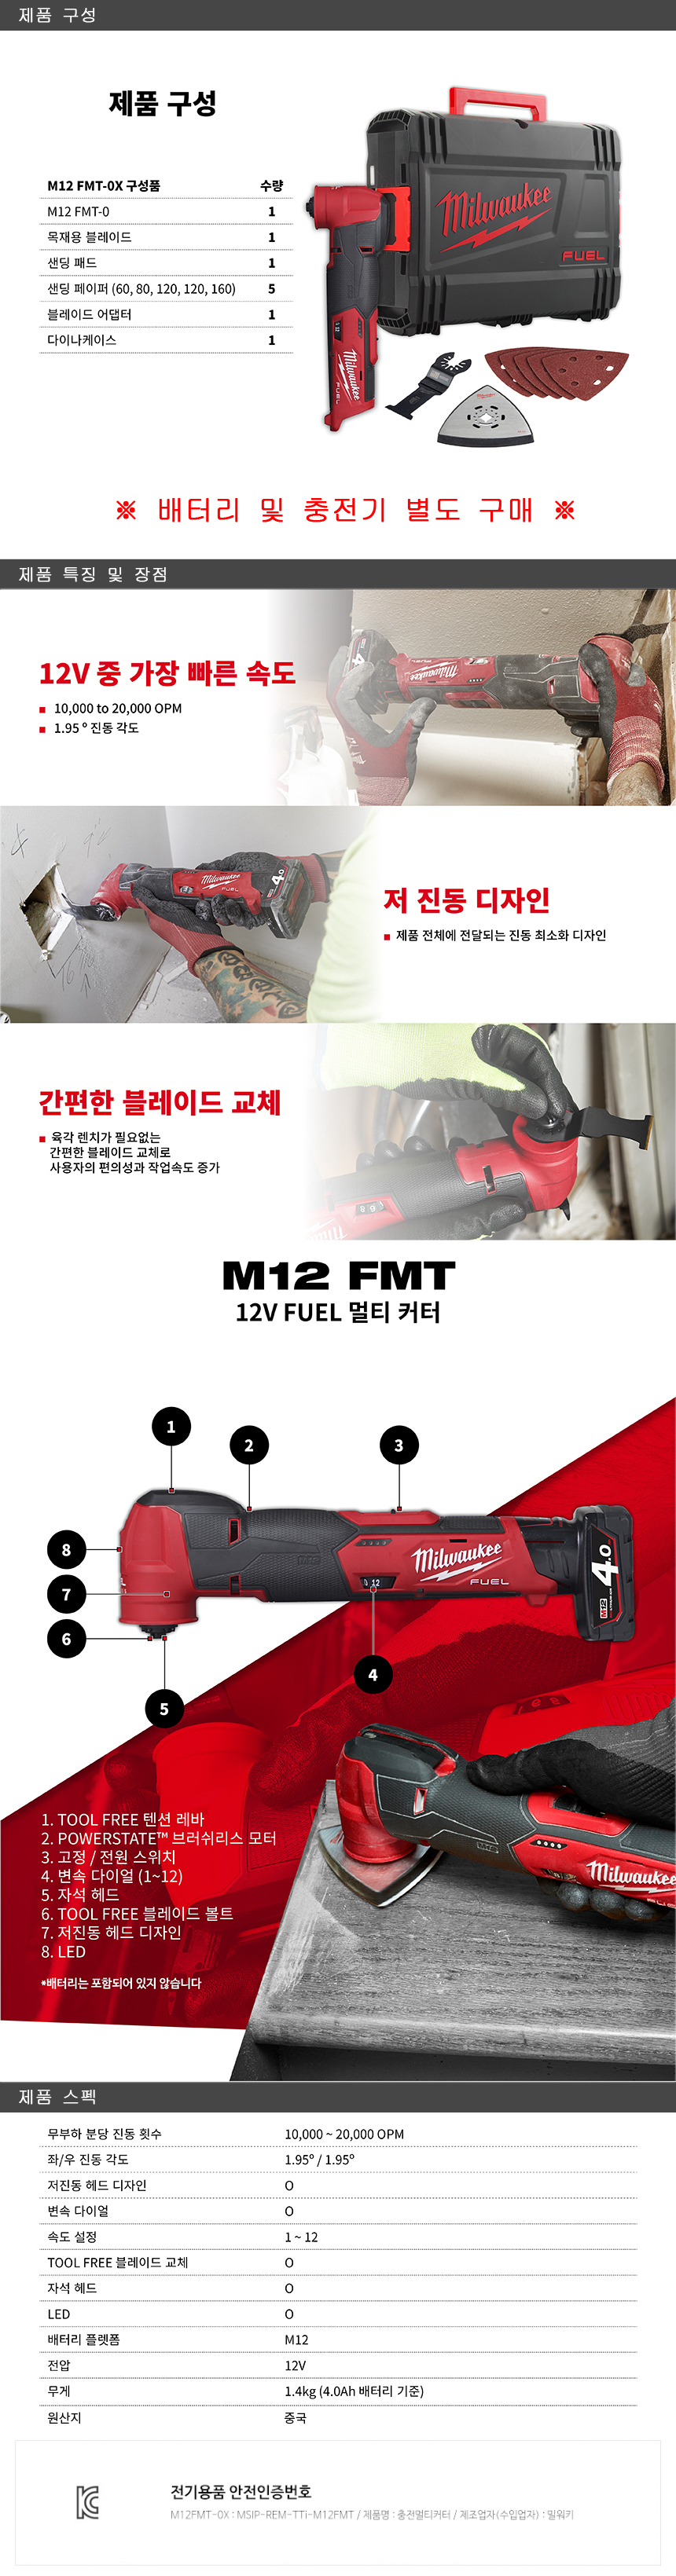 M12FMT-0X%2011.jpg